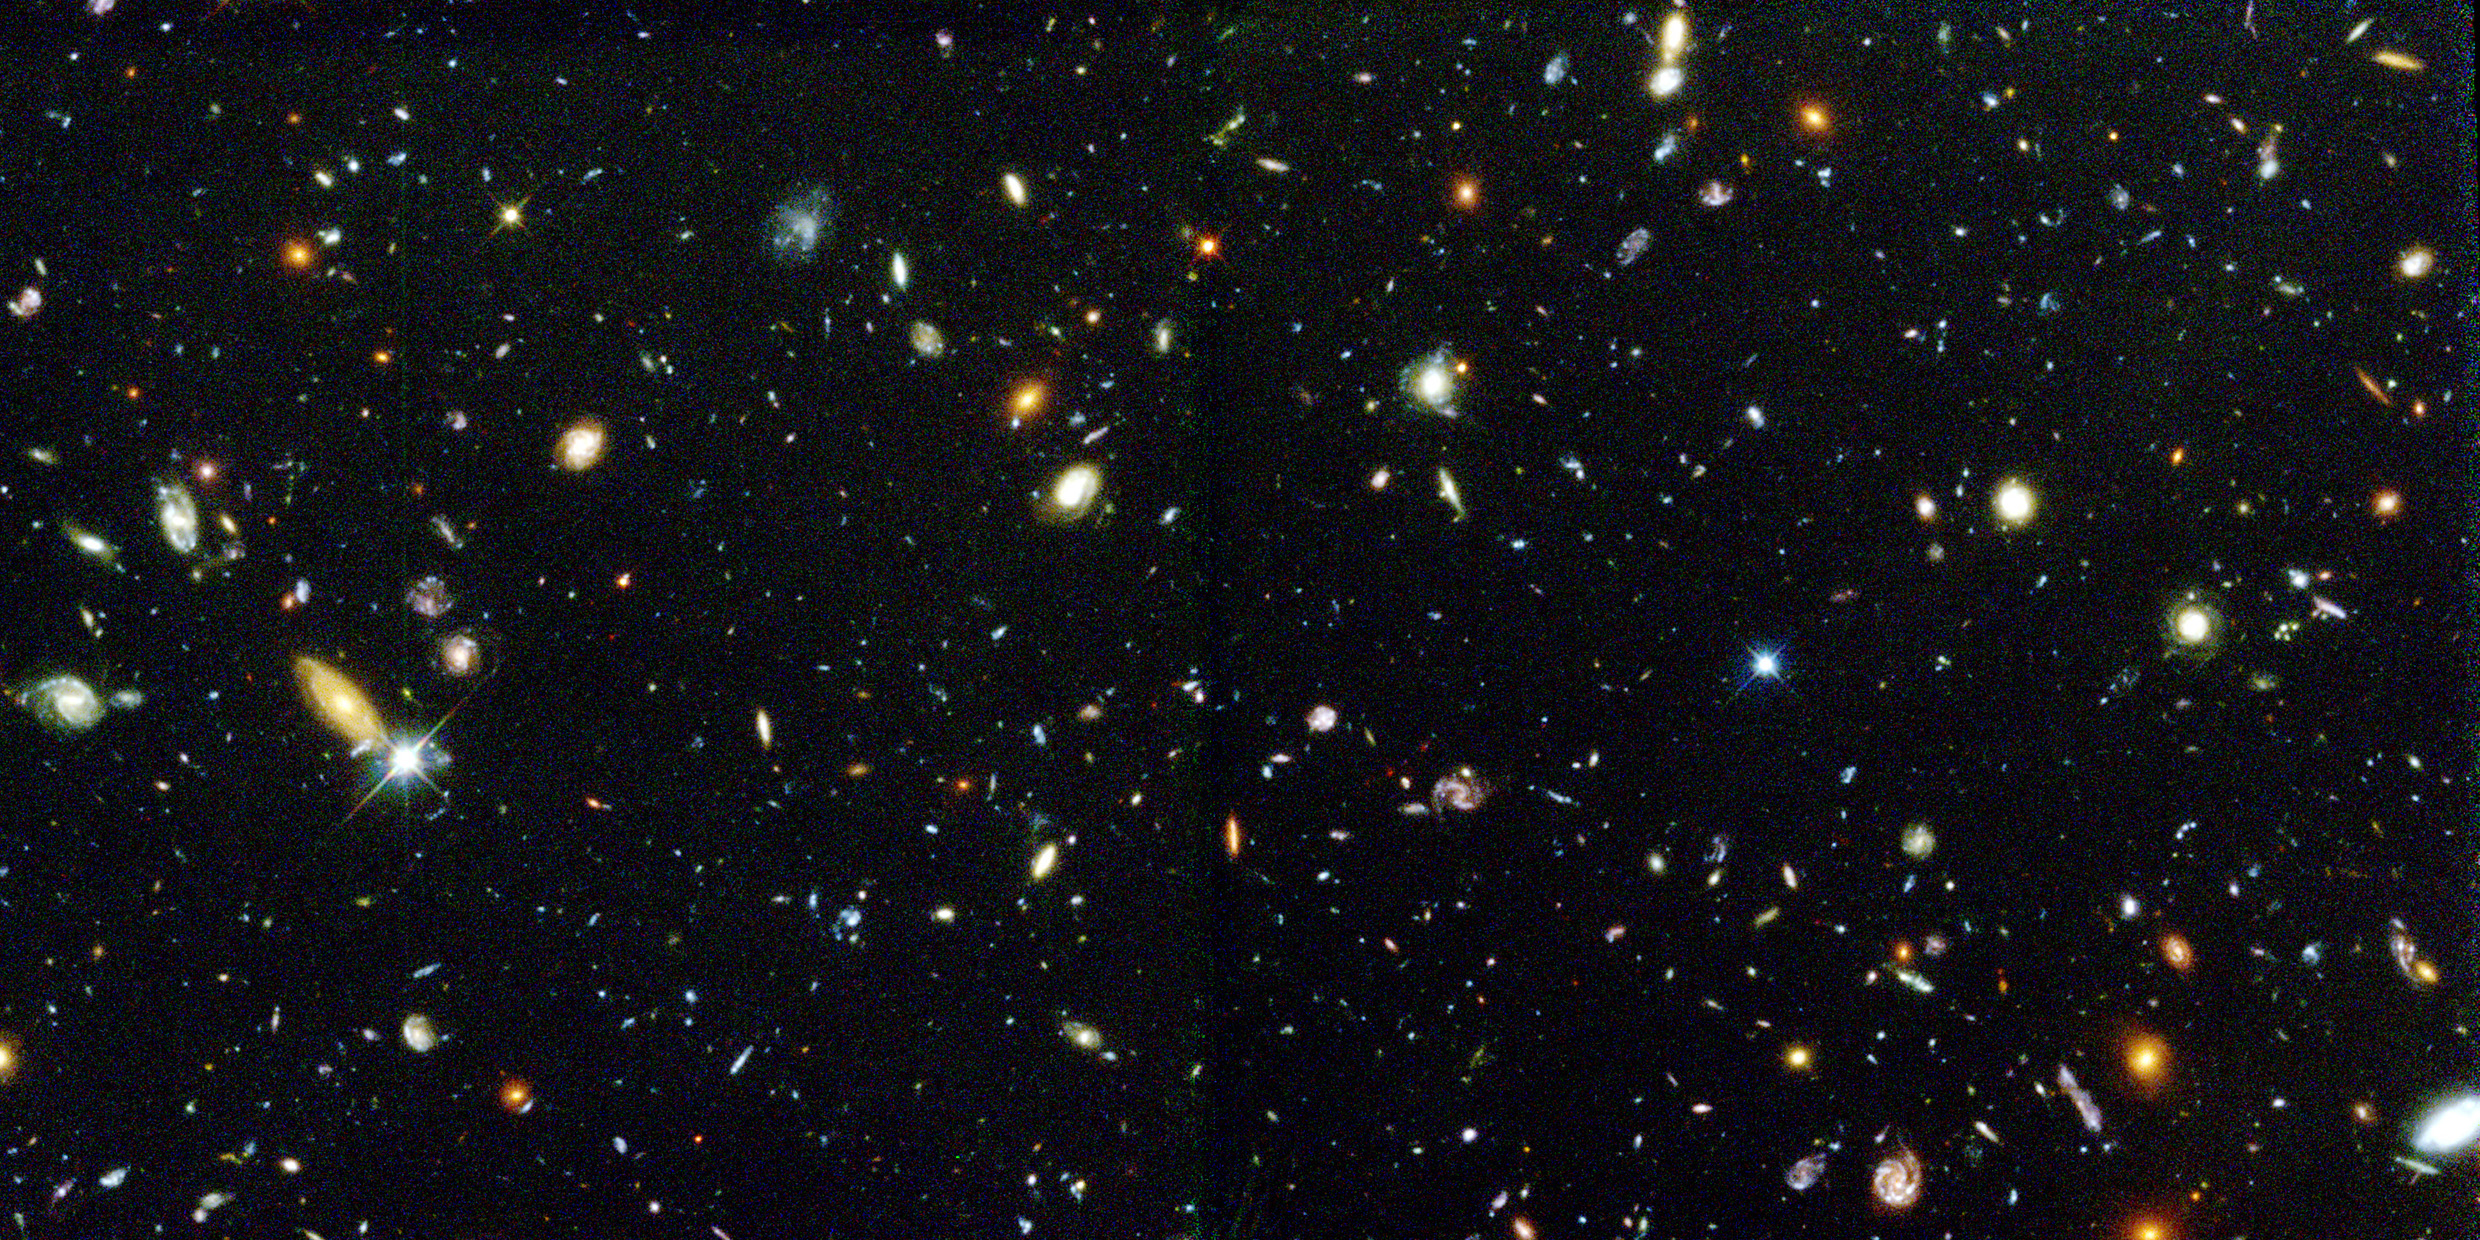 Image of many galaxies